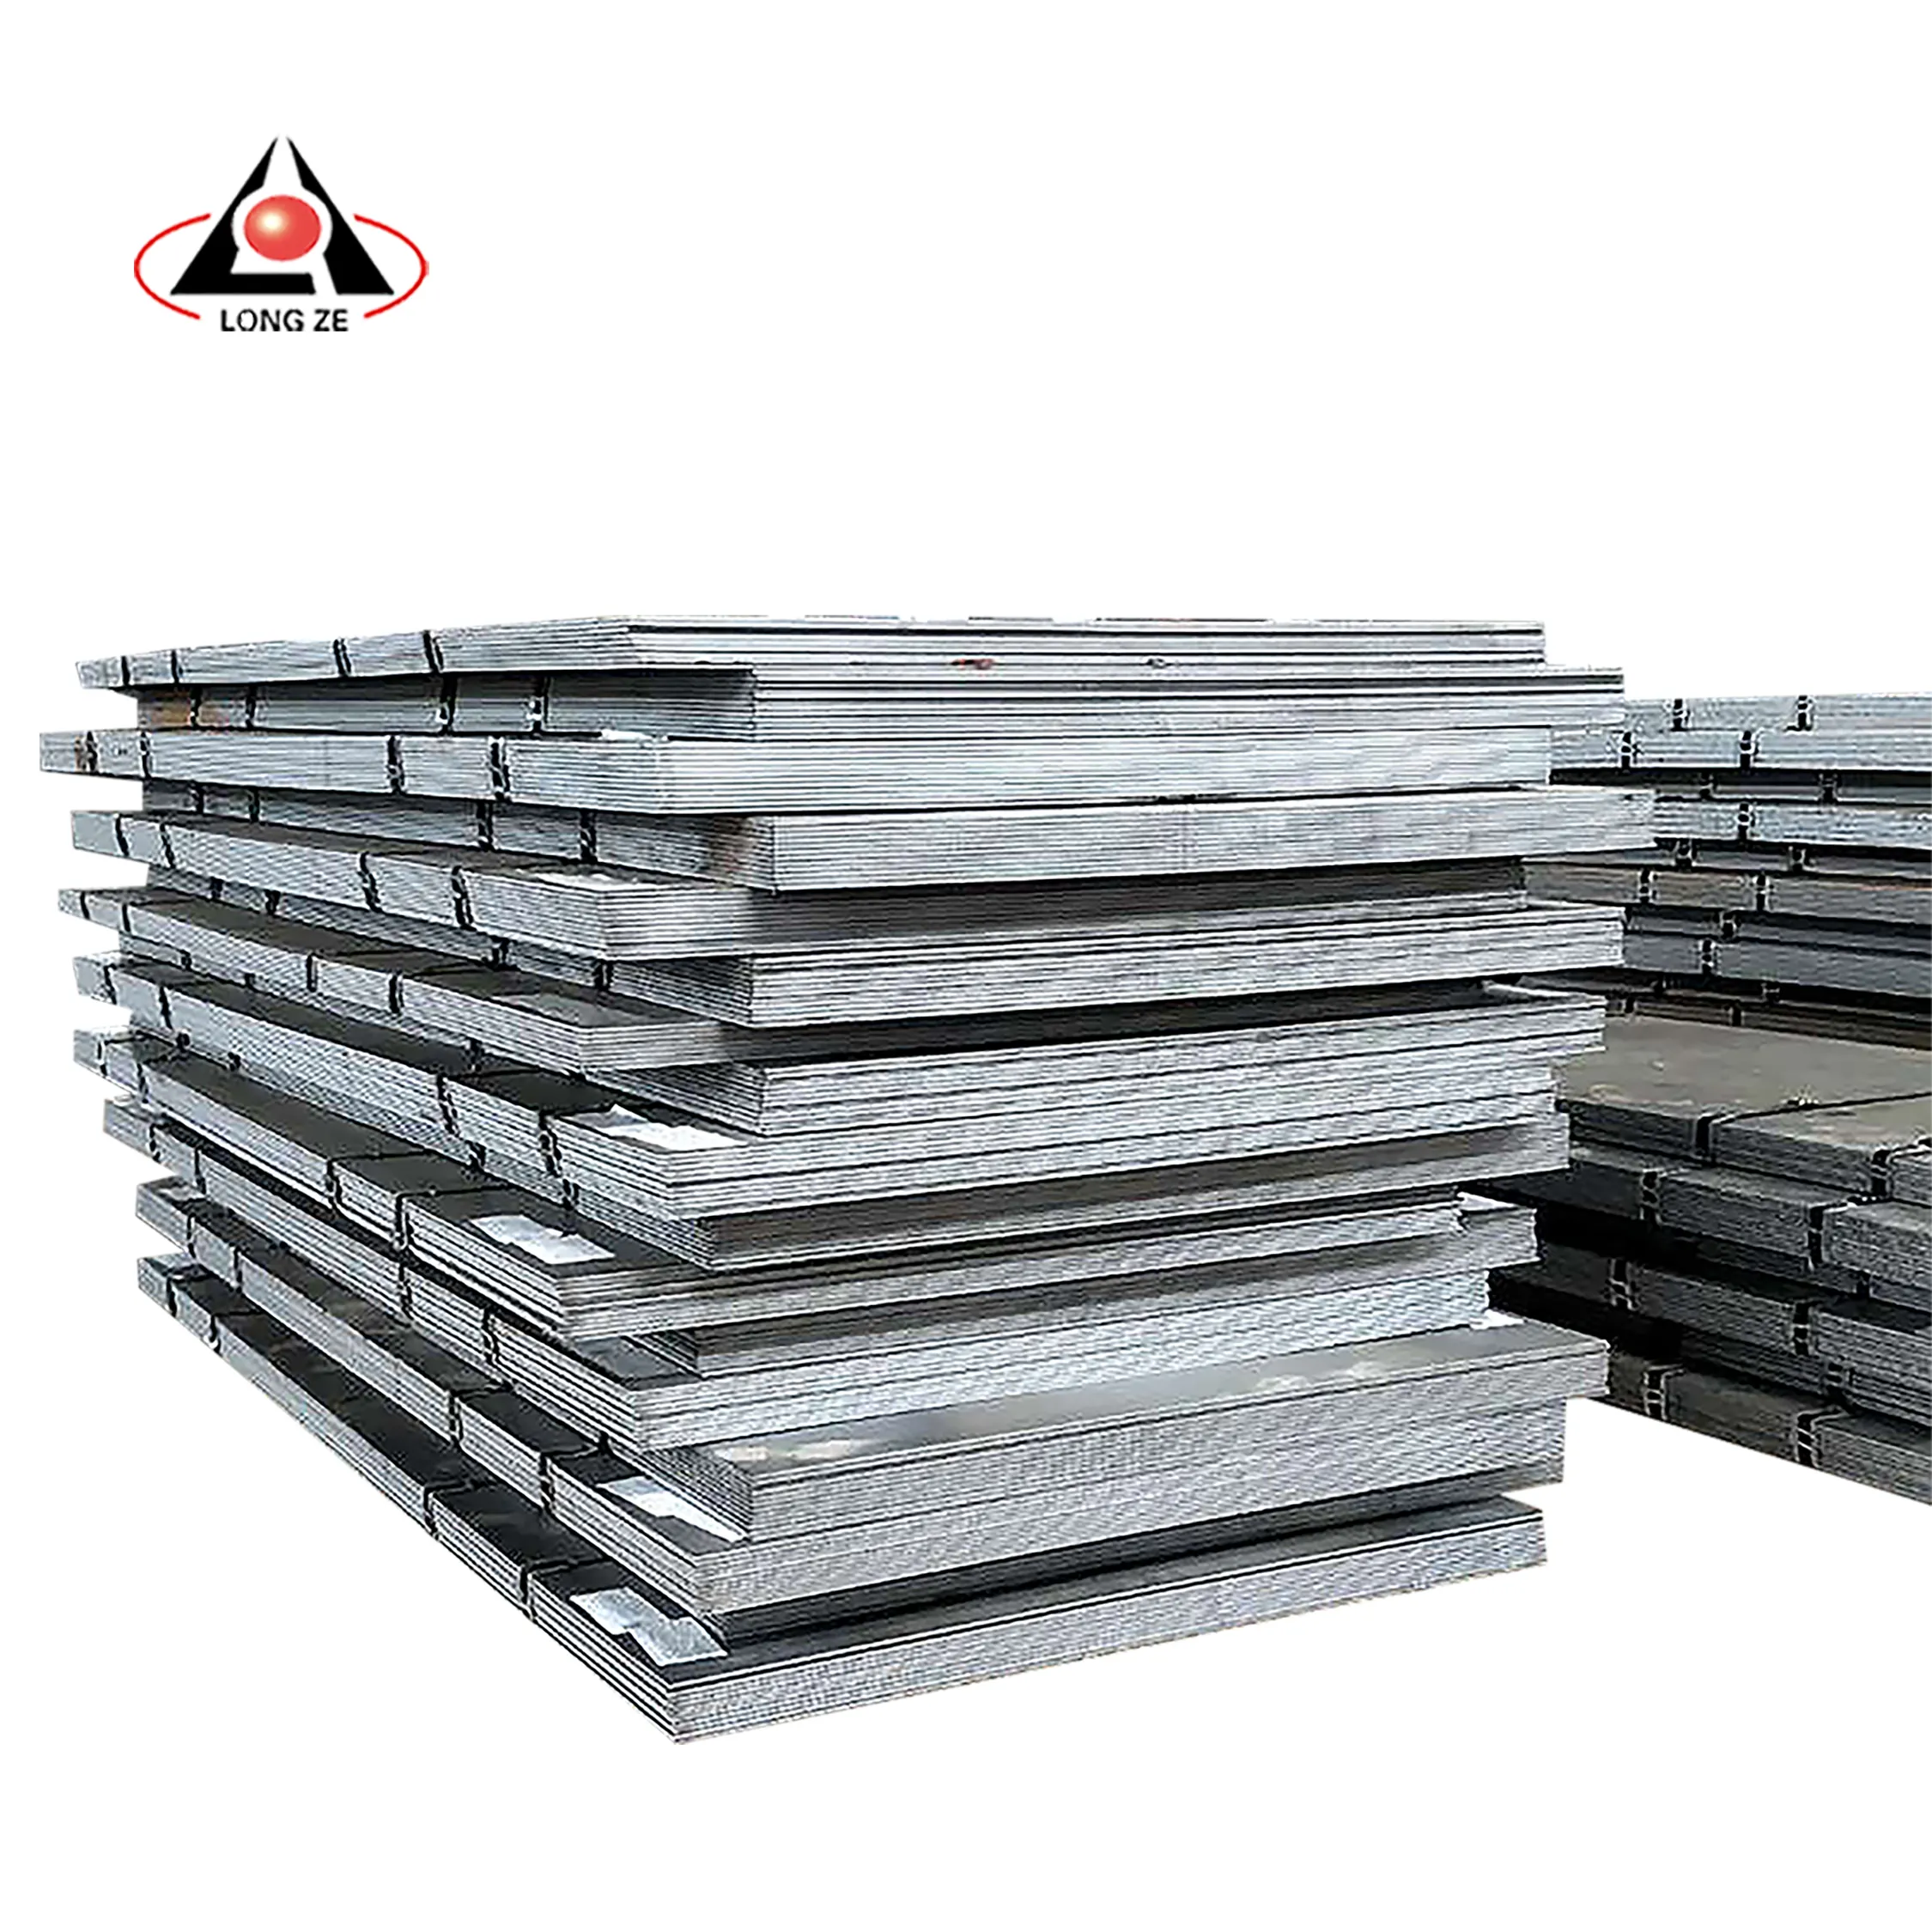 Mn13 X120Mn12high qualità acciaio di alta manganese fabbrica vendita diretta piastra in acciaio